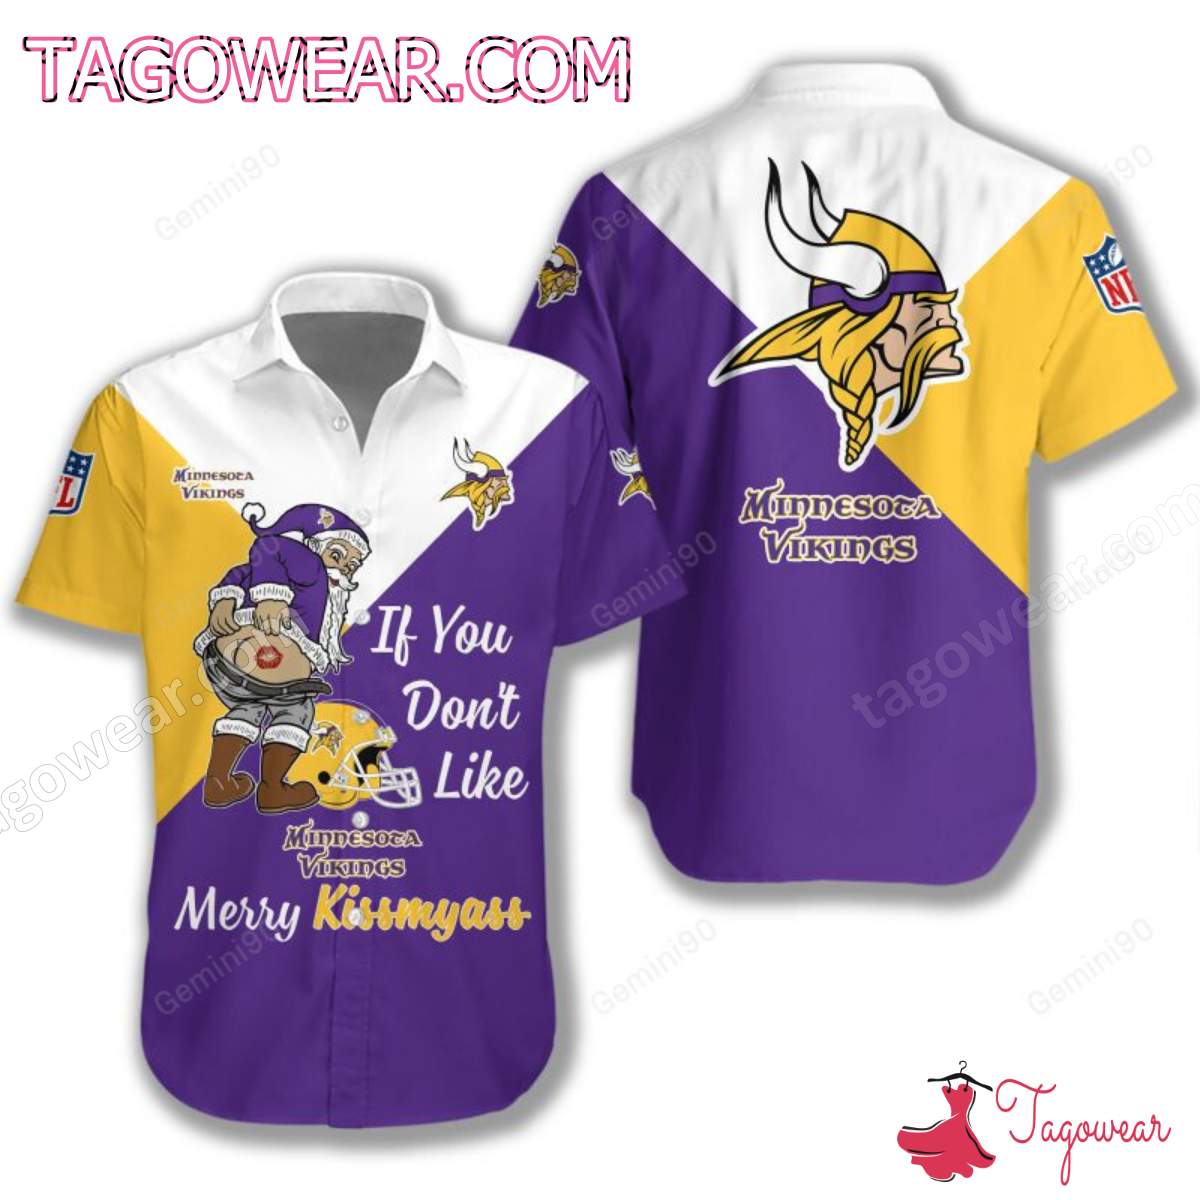 If You Don't Like Minnesota Vikings Merry Kissmyass T-shirt, Polo, Hoodie a